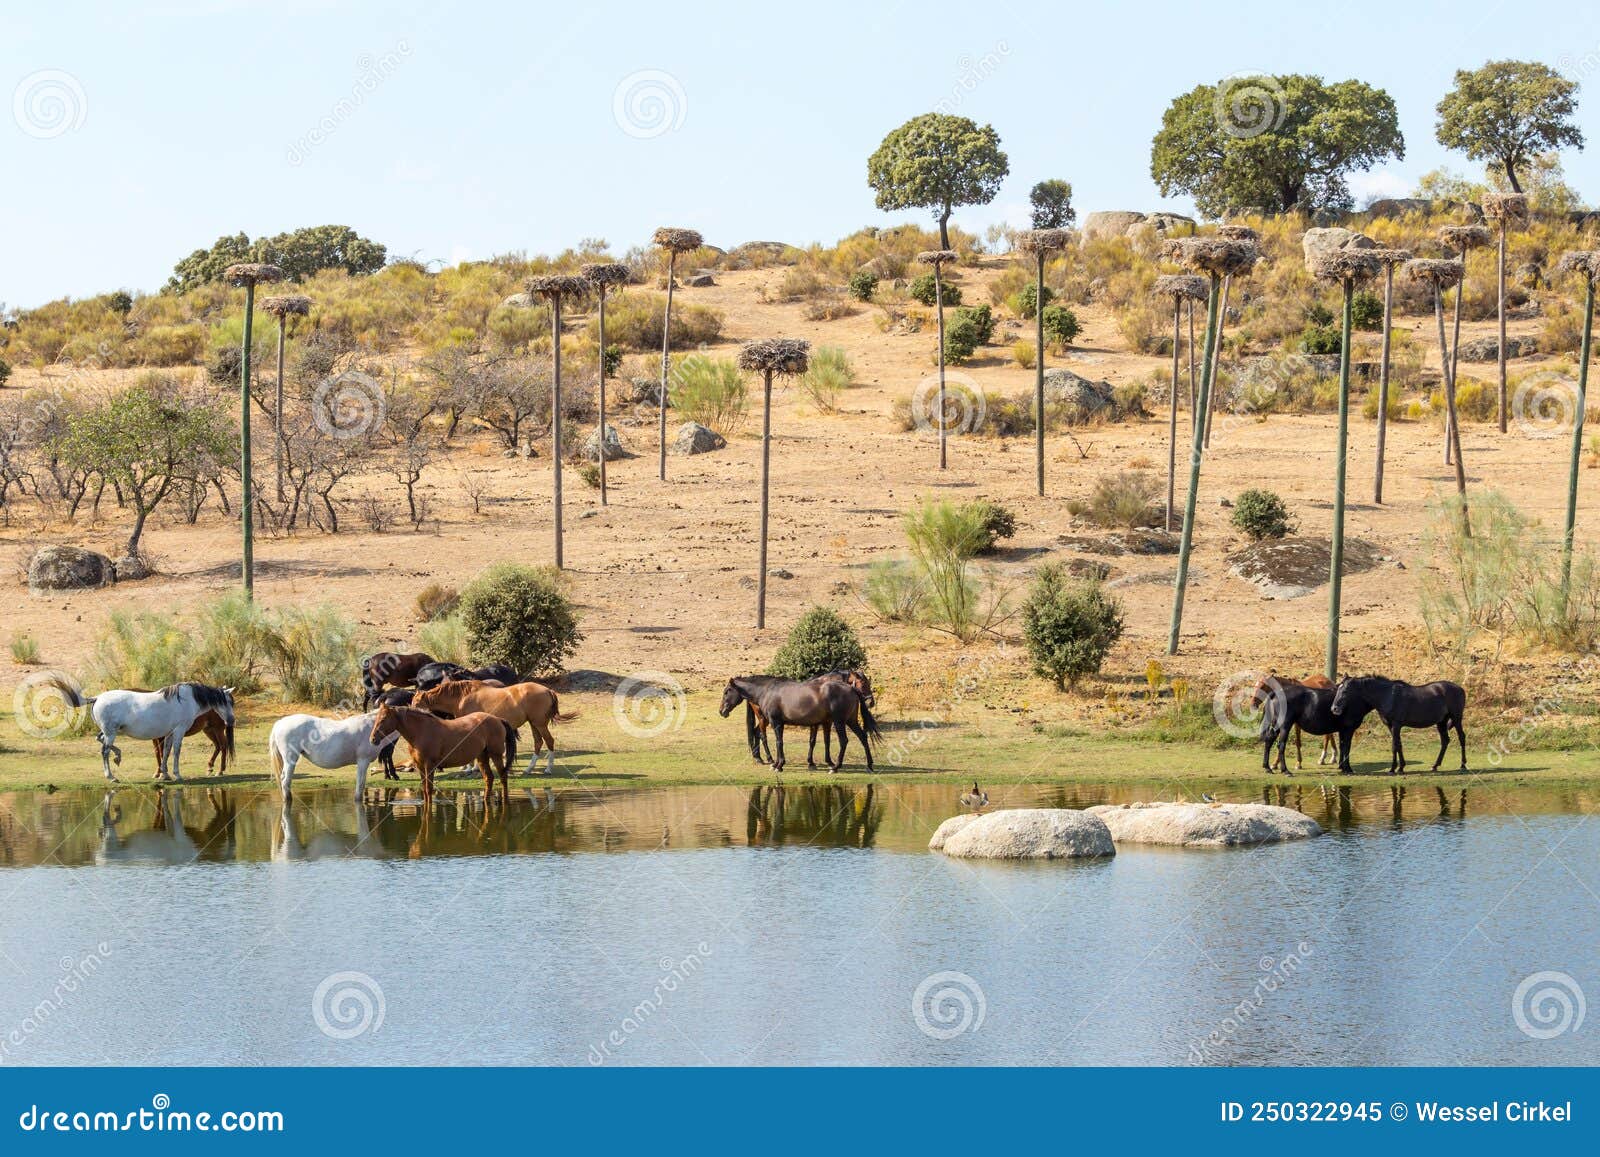 horses along lake in spanish los barruecos natural park